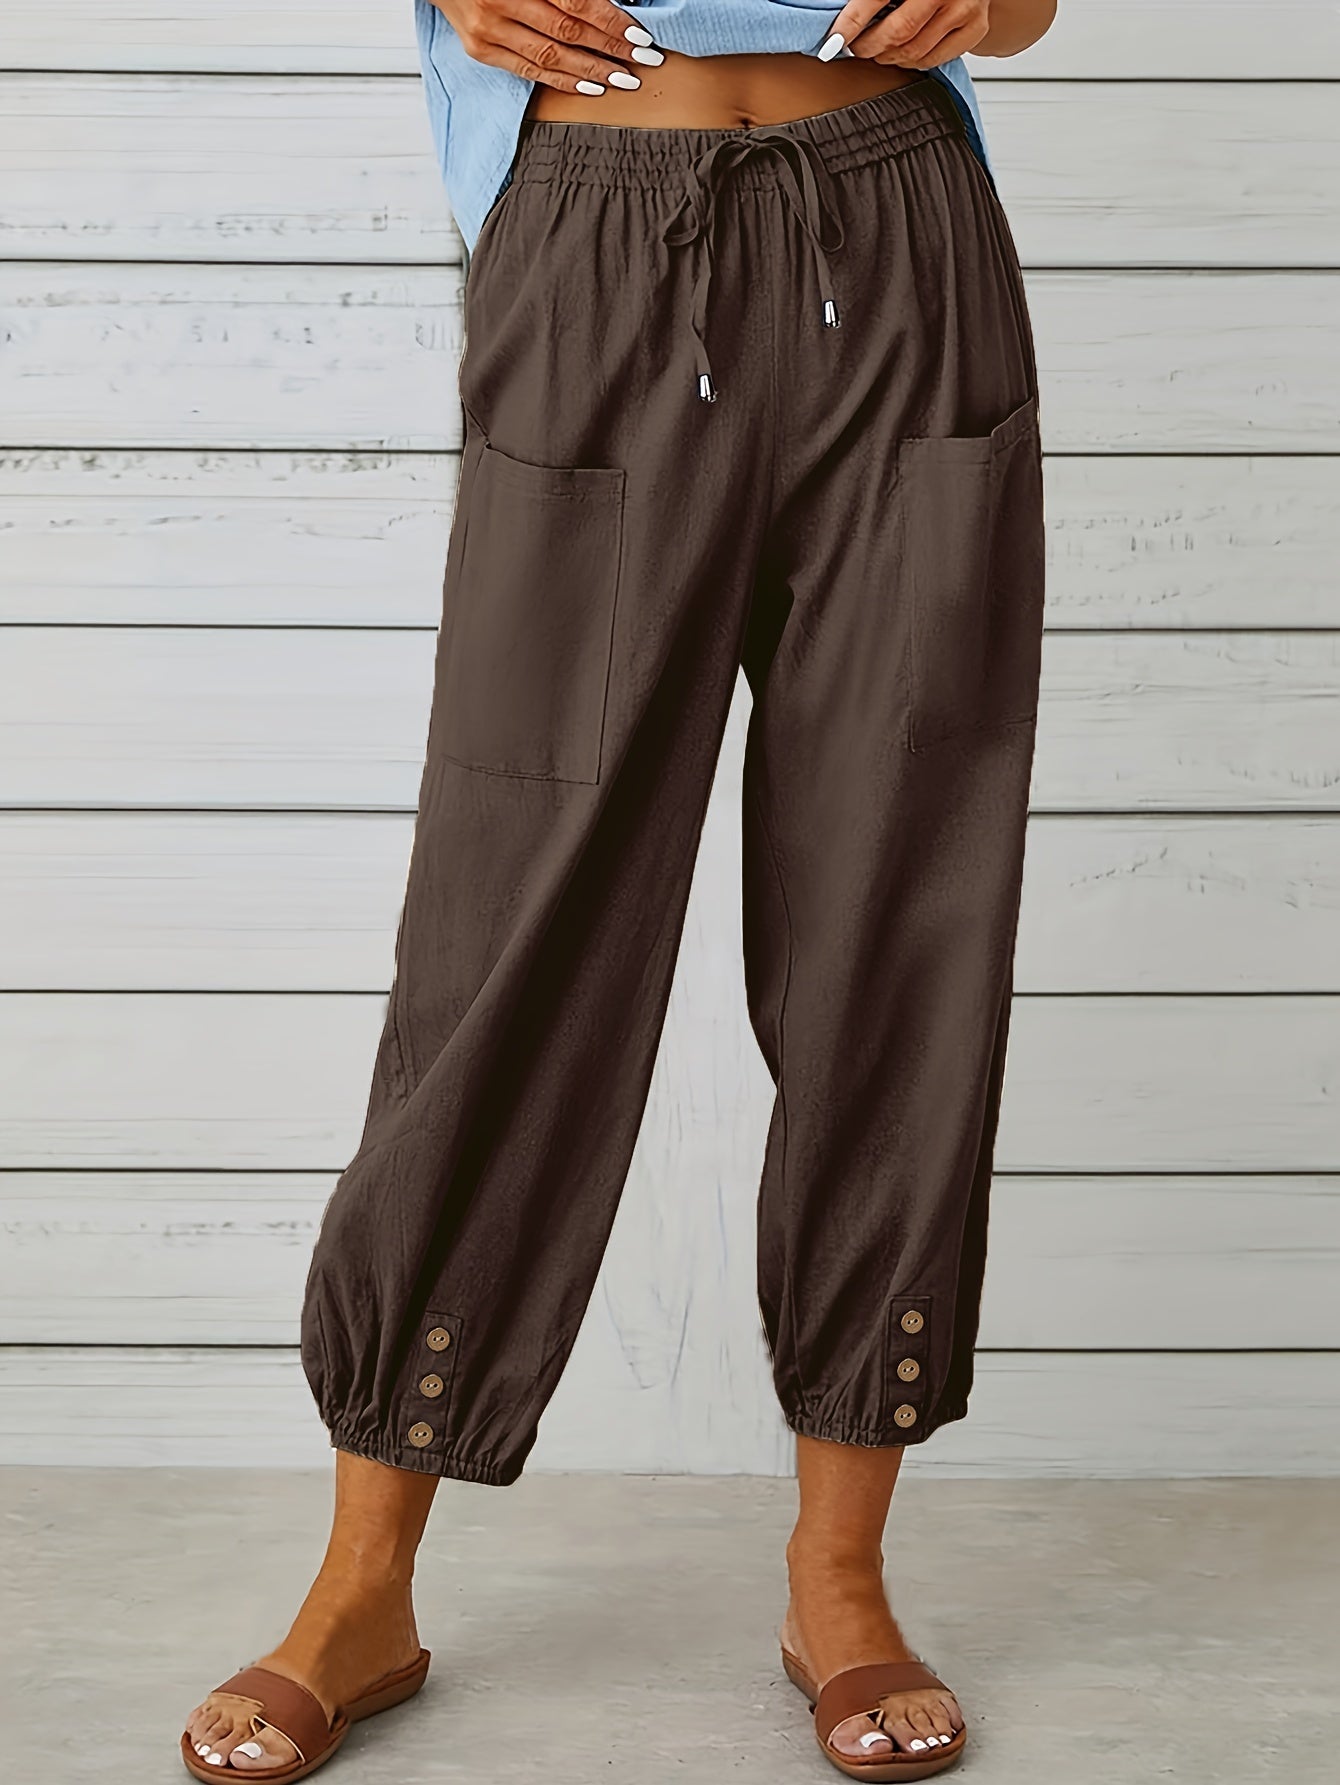 Plus Size Casual Pants, Women's Plus Solid Bow Knot Elastic Button Decor Pants With Pockets